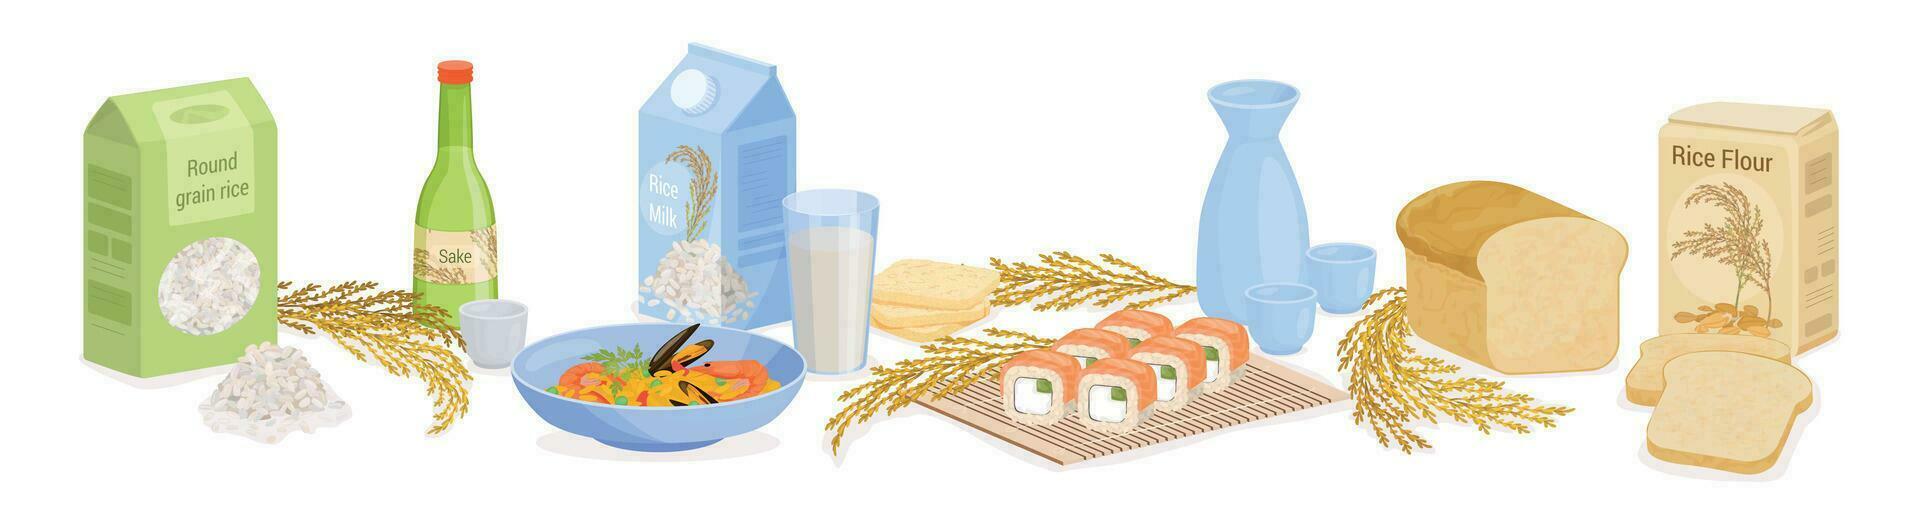 arroz productos rango composición vector